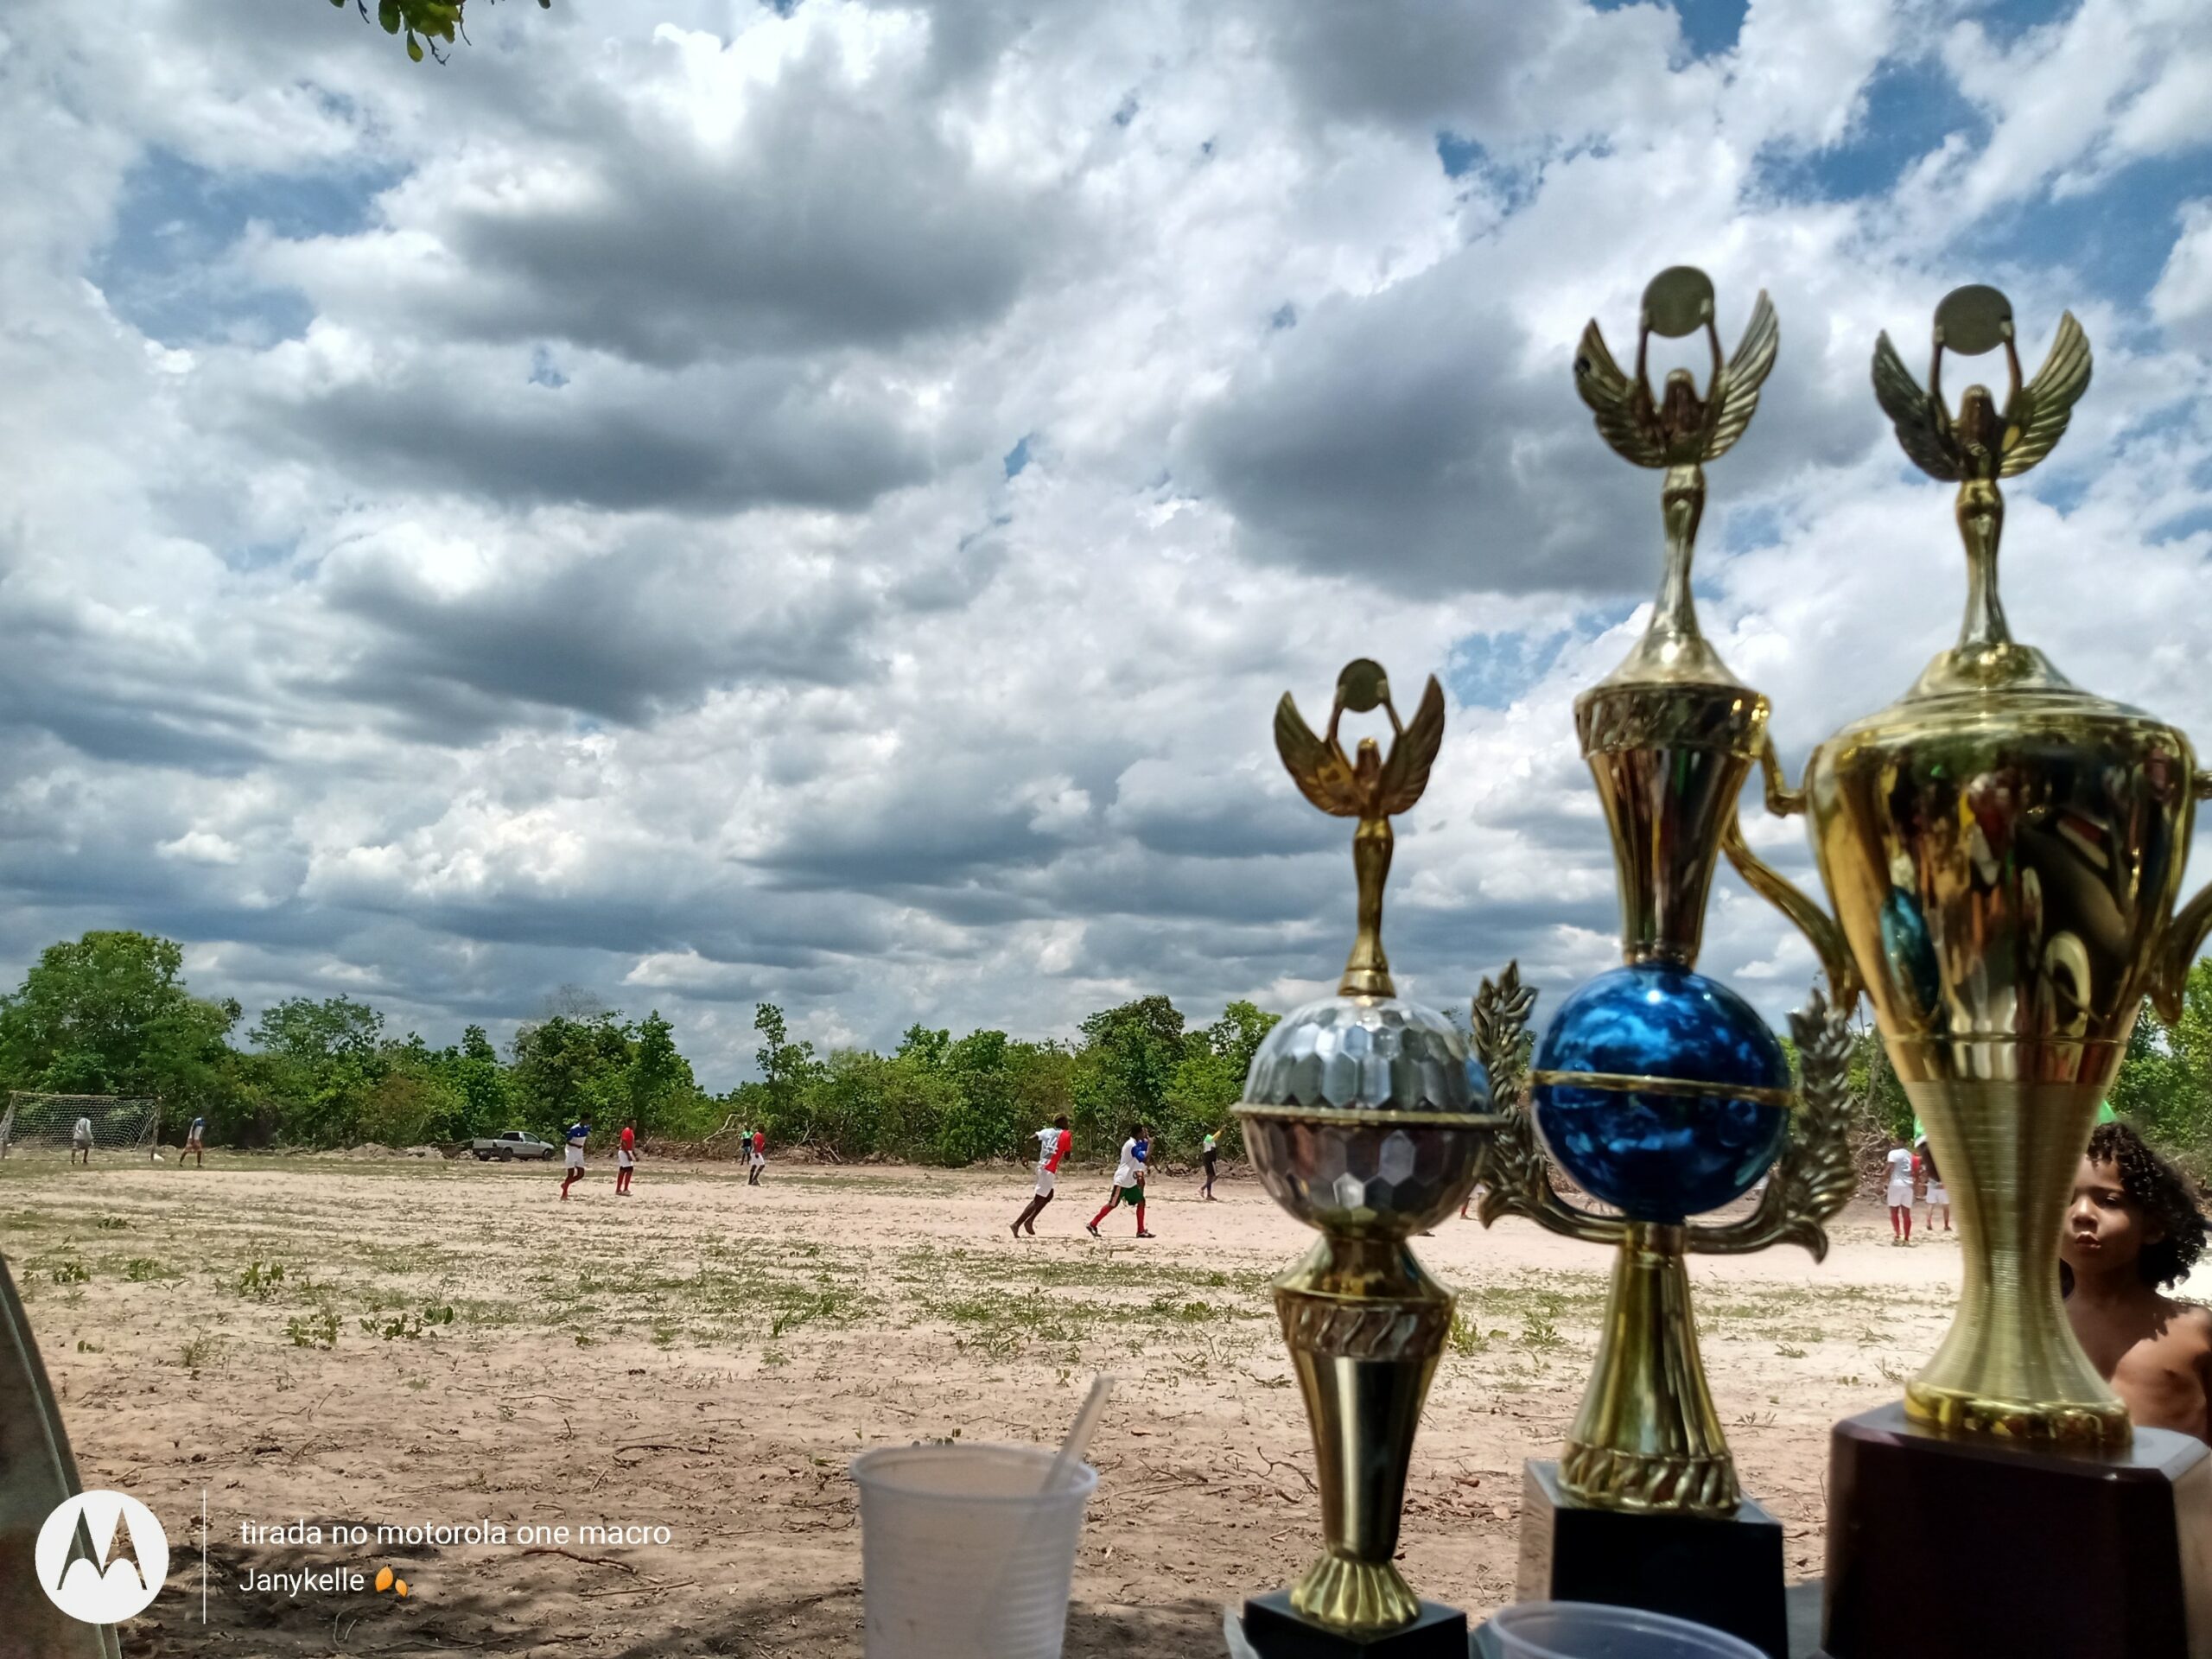 1º Torneio de Futebol “Entre Amigos”, reúne Comunidade Quilombola “Mimoso de Arraias”